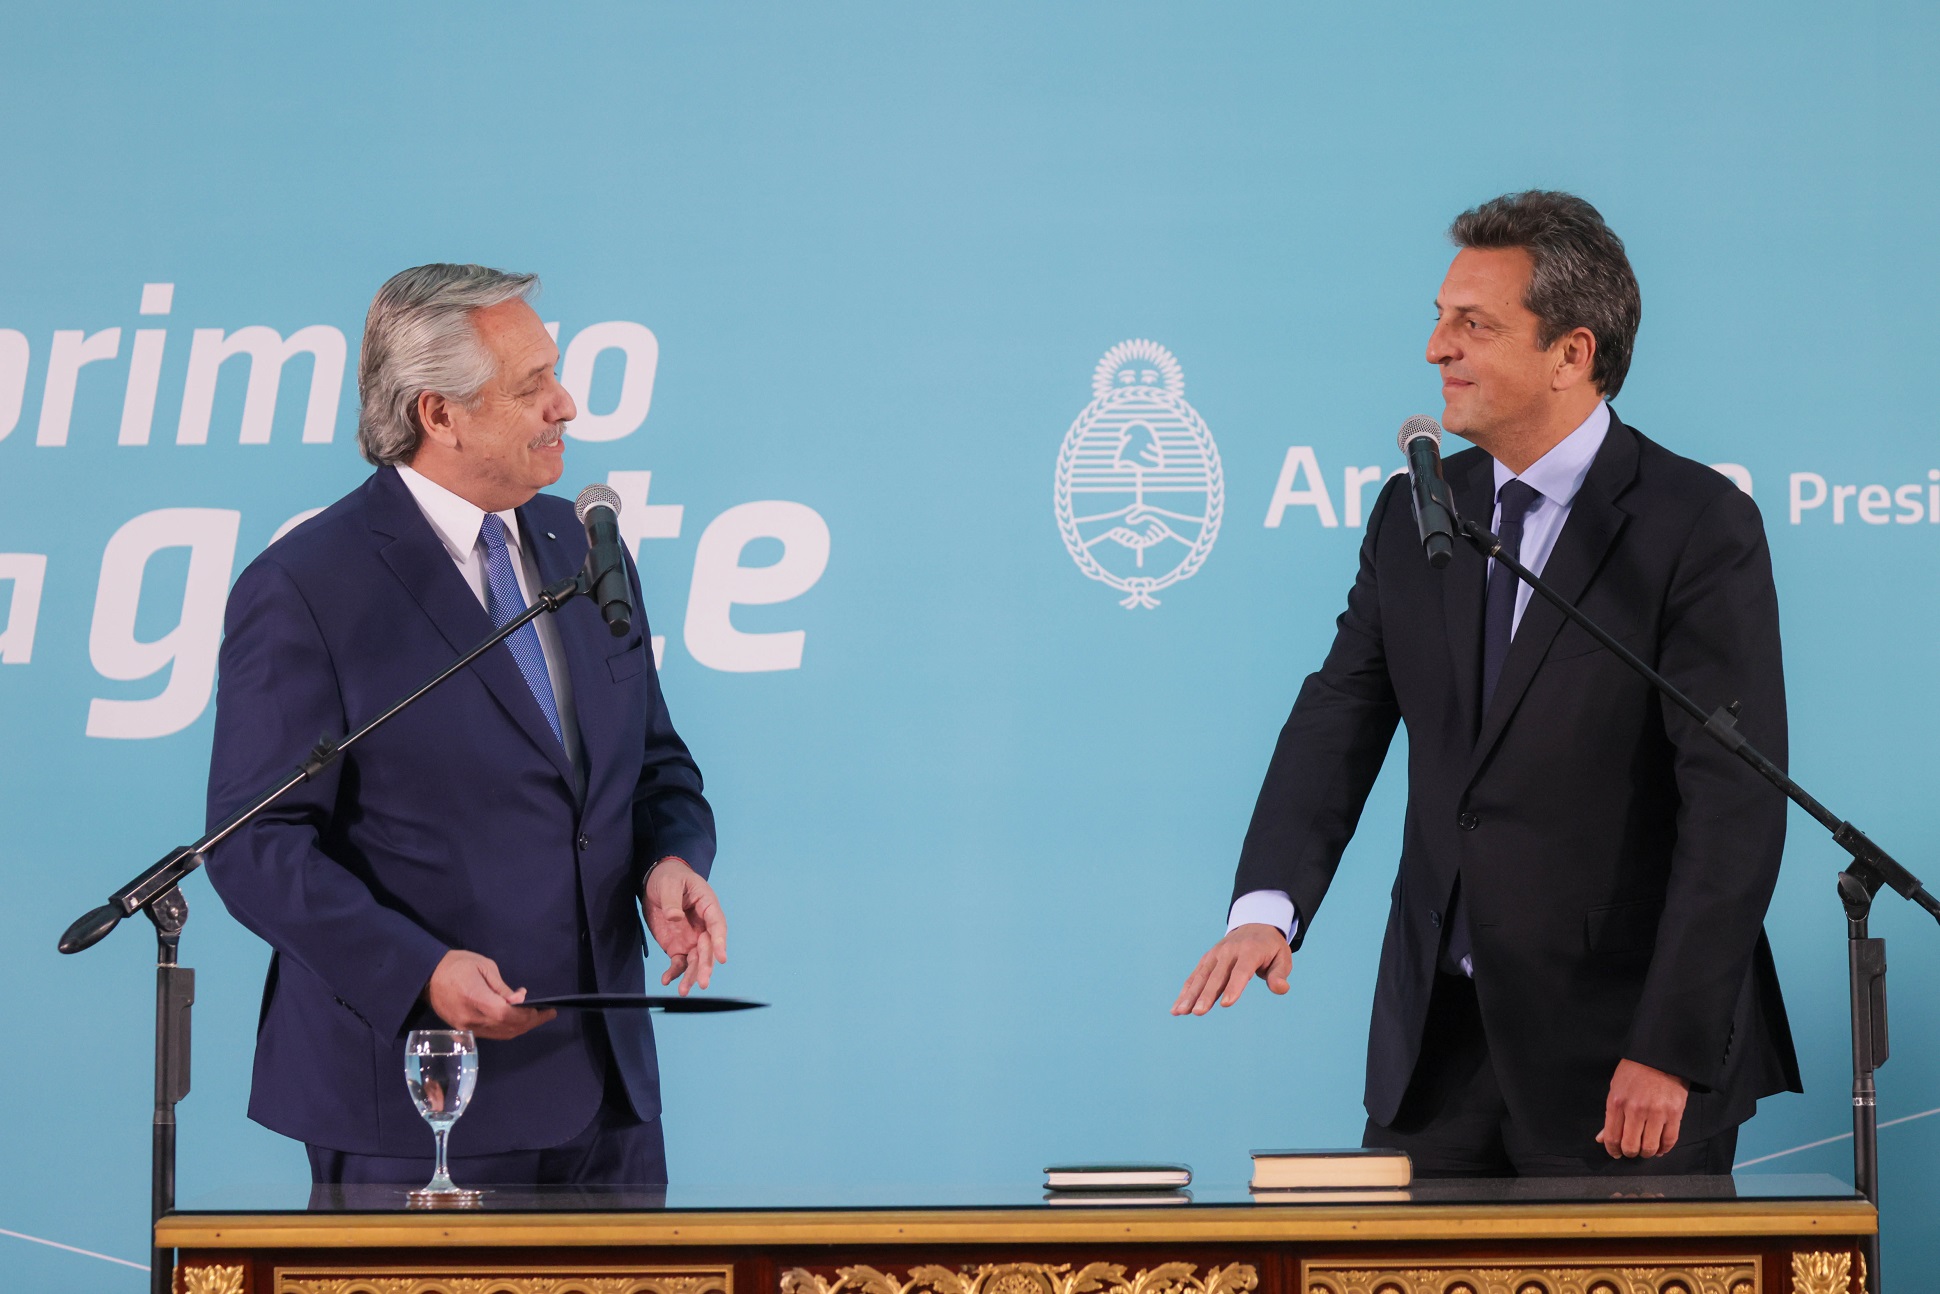 Presidente argentino Alberto Fernández (à esquerda) junto ao candidato presidencial da coalizão governista, Sergio Massa